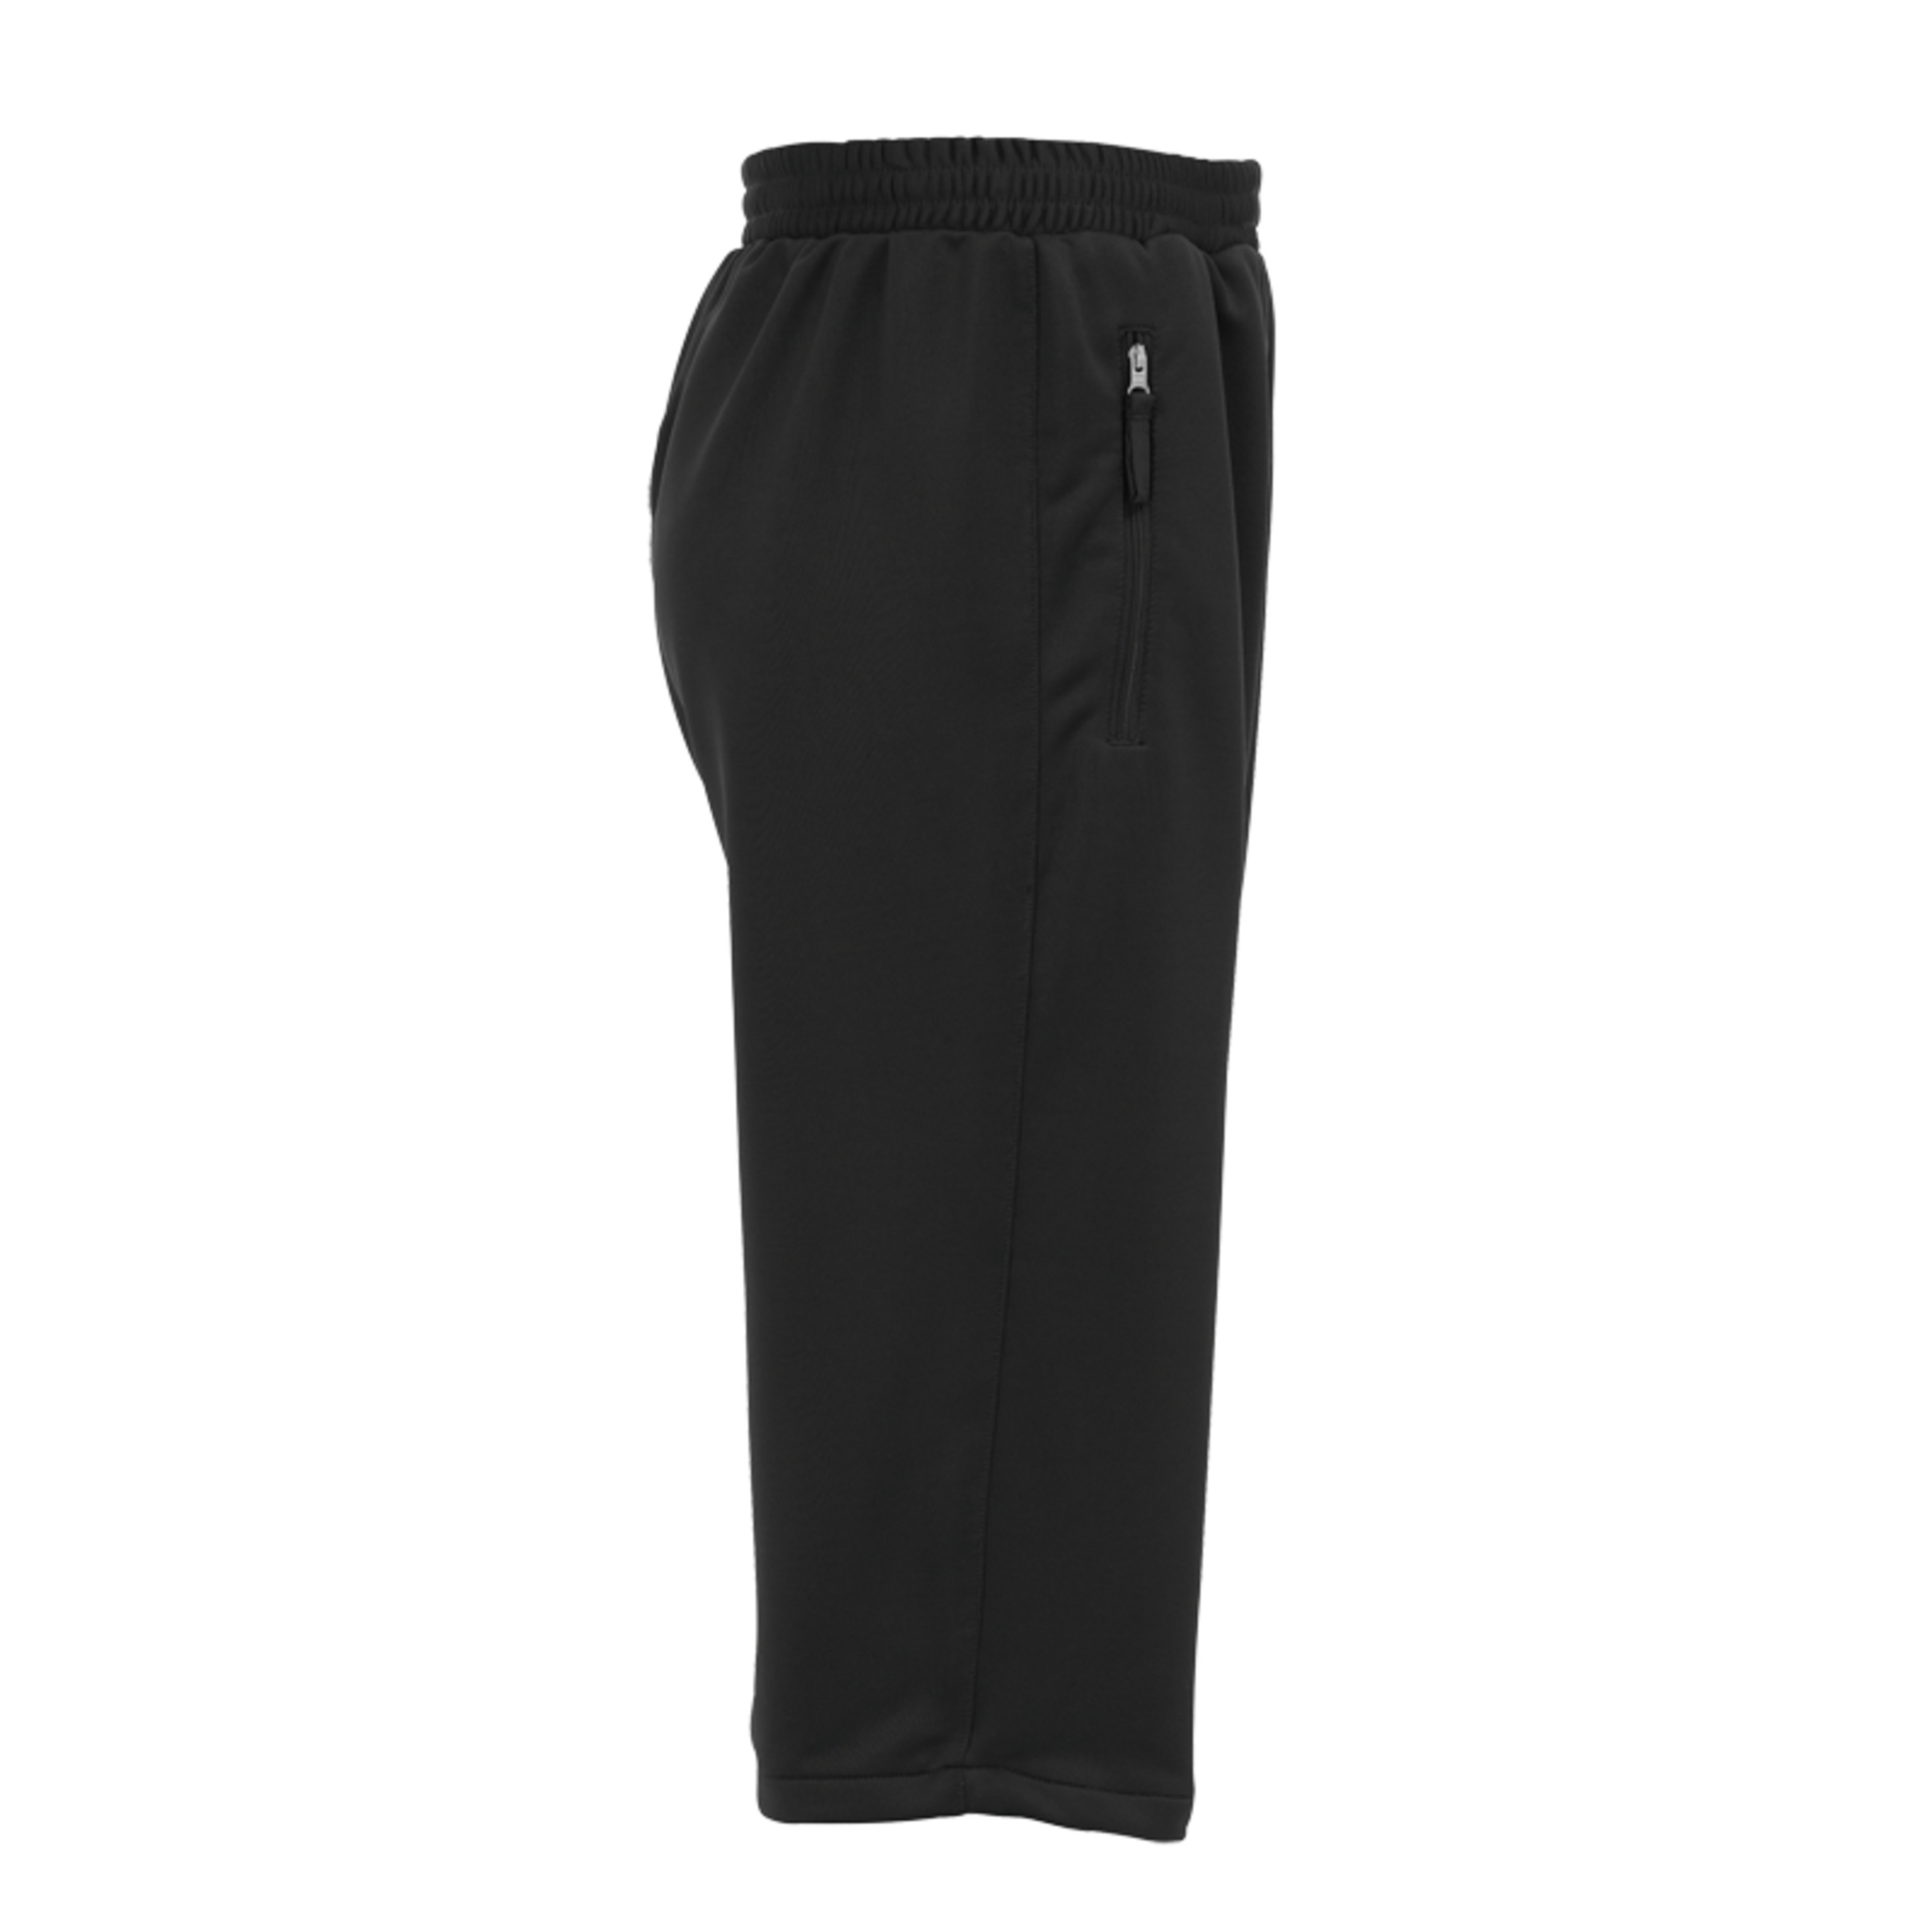 Essential Shorts Largo Negro Uhlsport